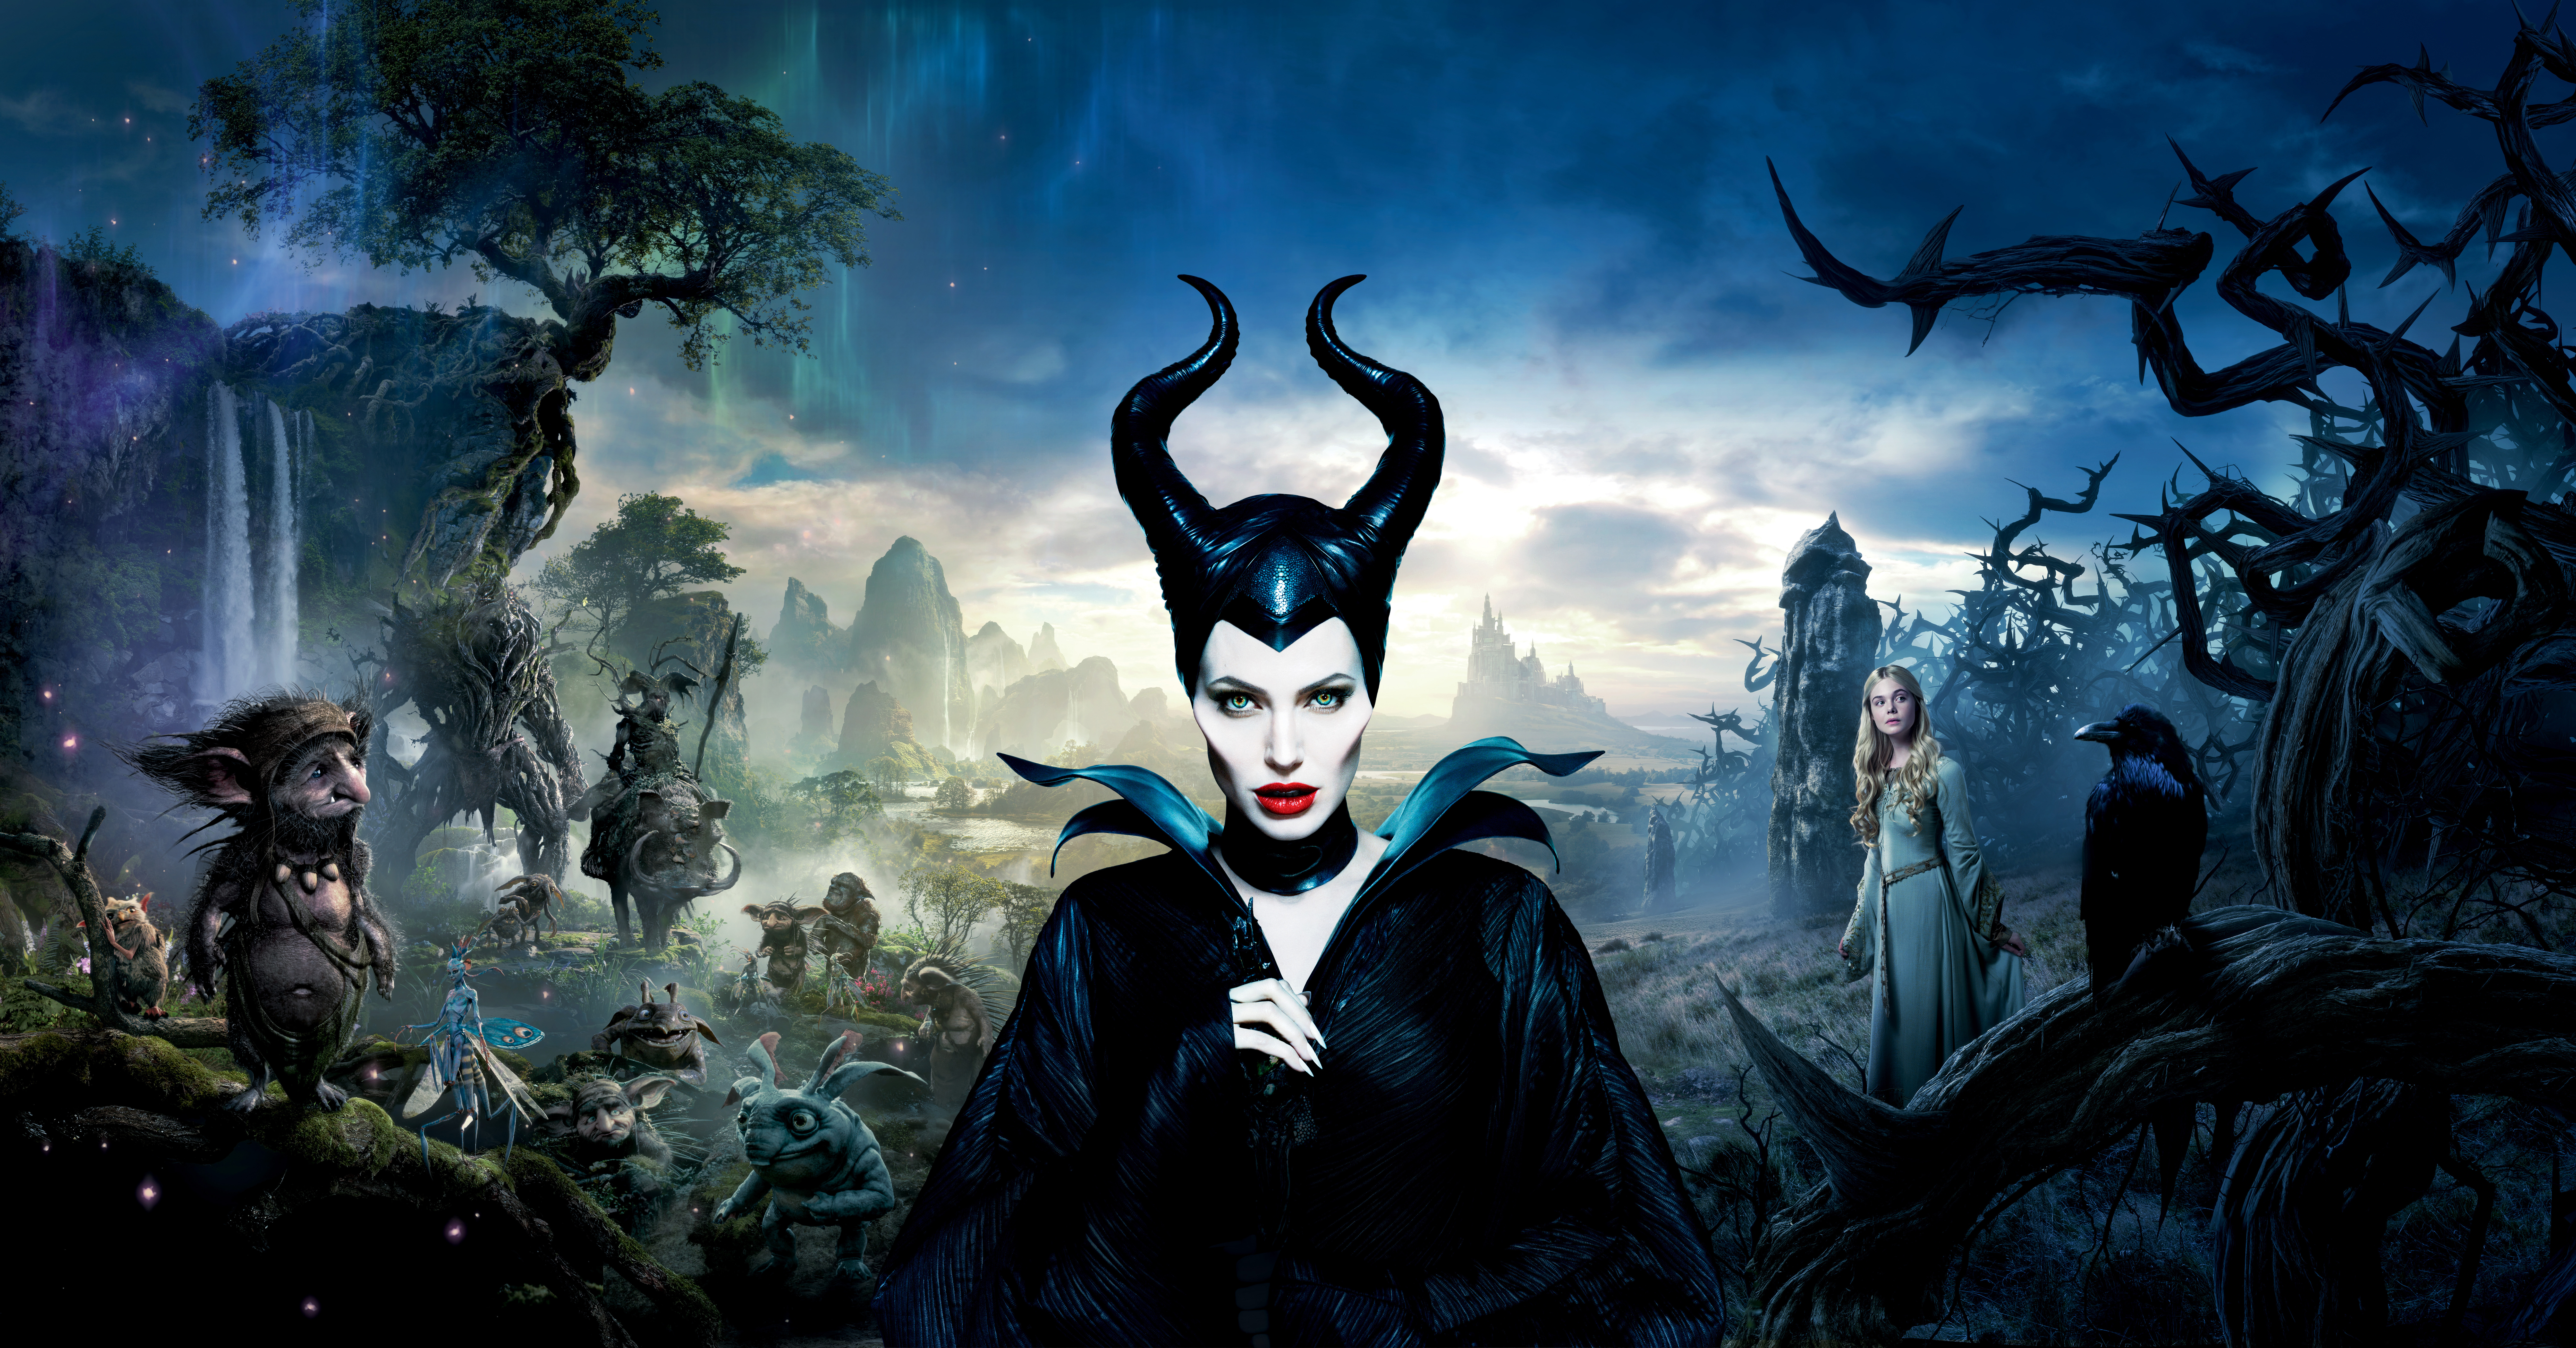 Обои The movie Maleficent: mistress of the dark семейный фэнтези на рабочий стол